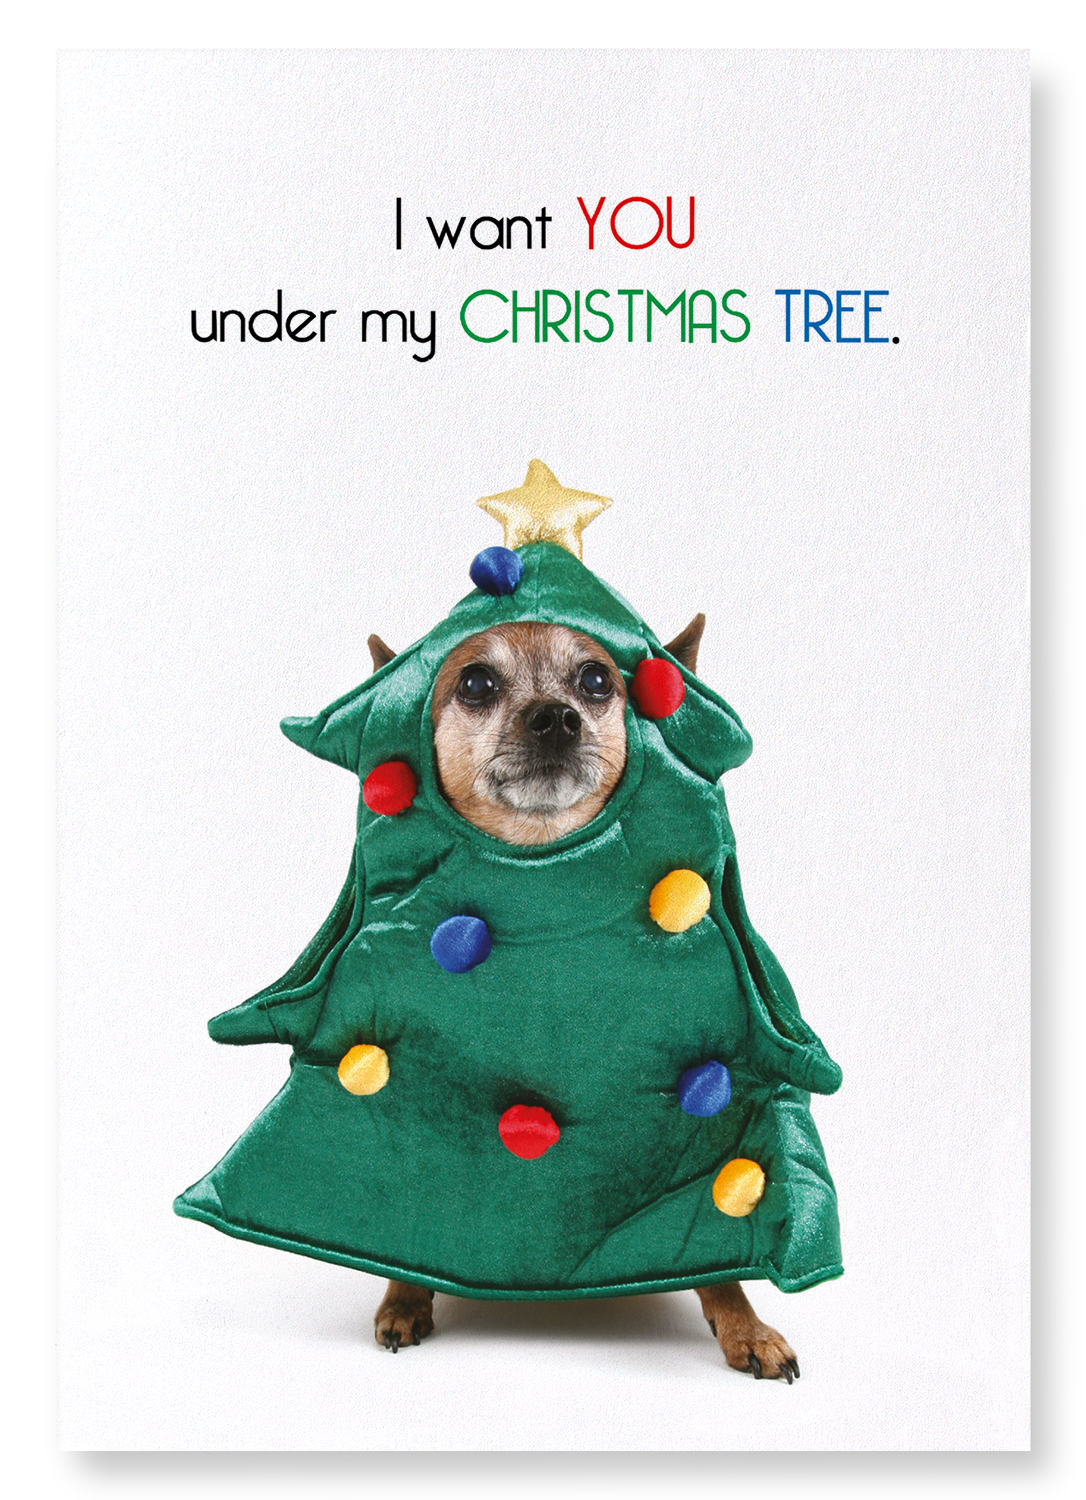 UNDER MY CHRISTMAS TREE: Funny Animal Art print